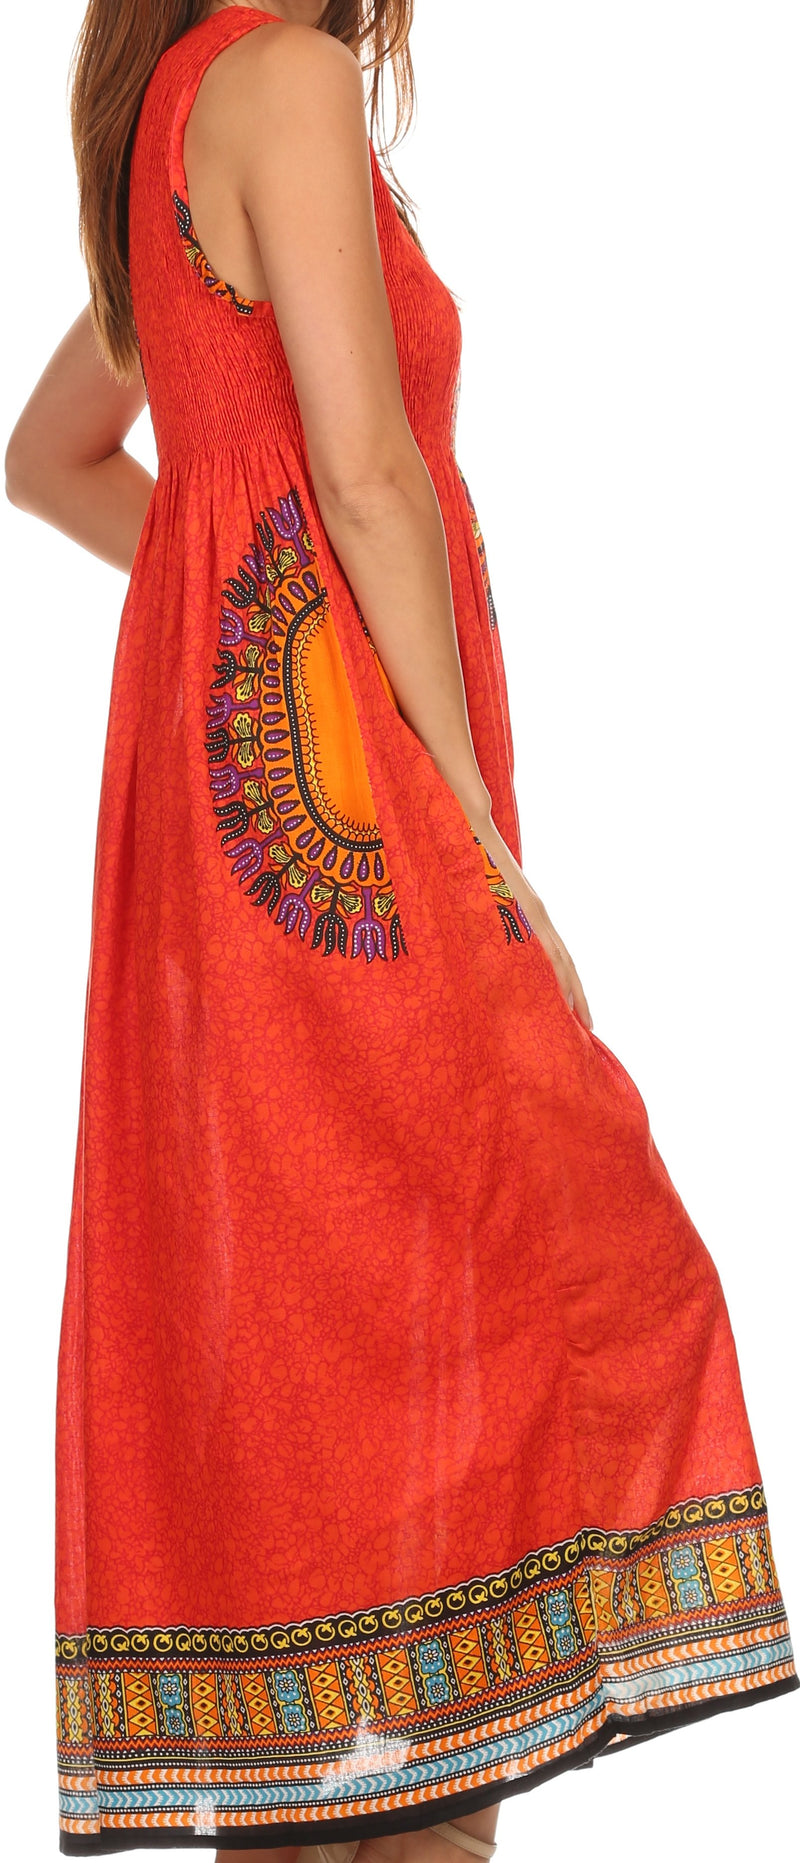 Sakkas Hoola Long Tall Full Length Tribal Printed Batik Tank Top Sleeveless Dress